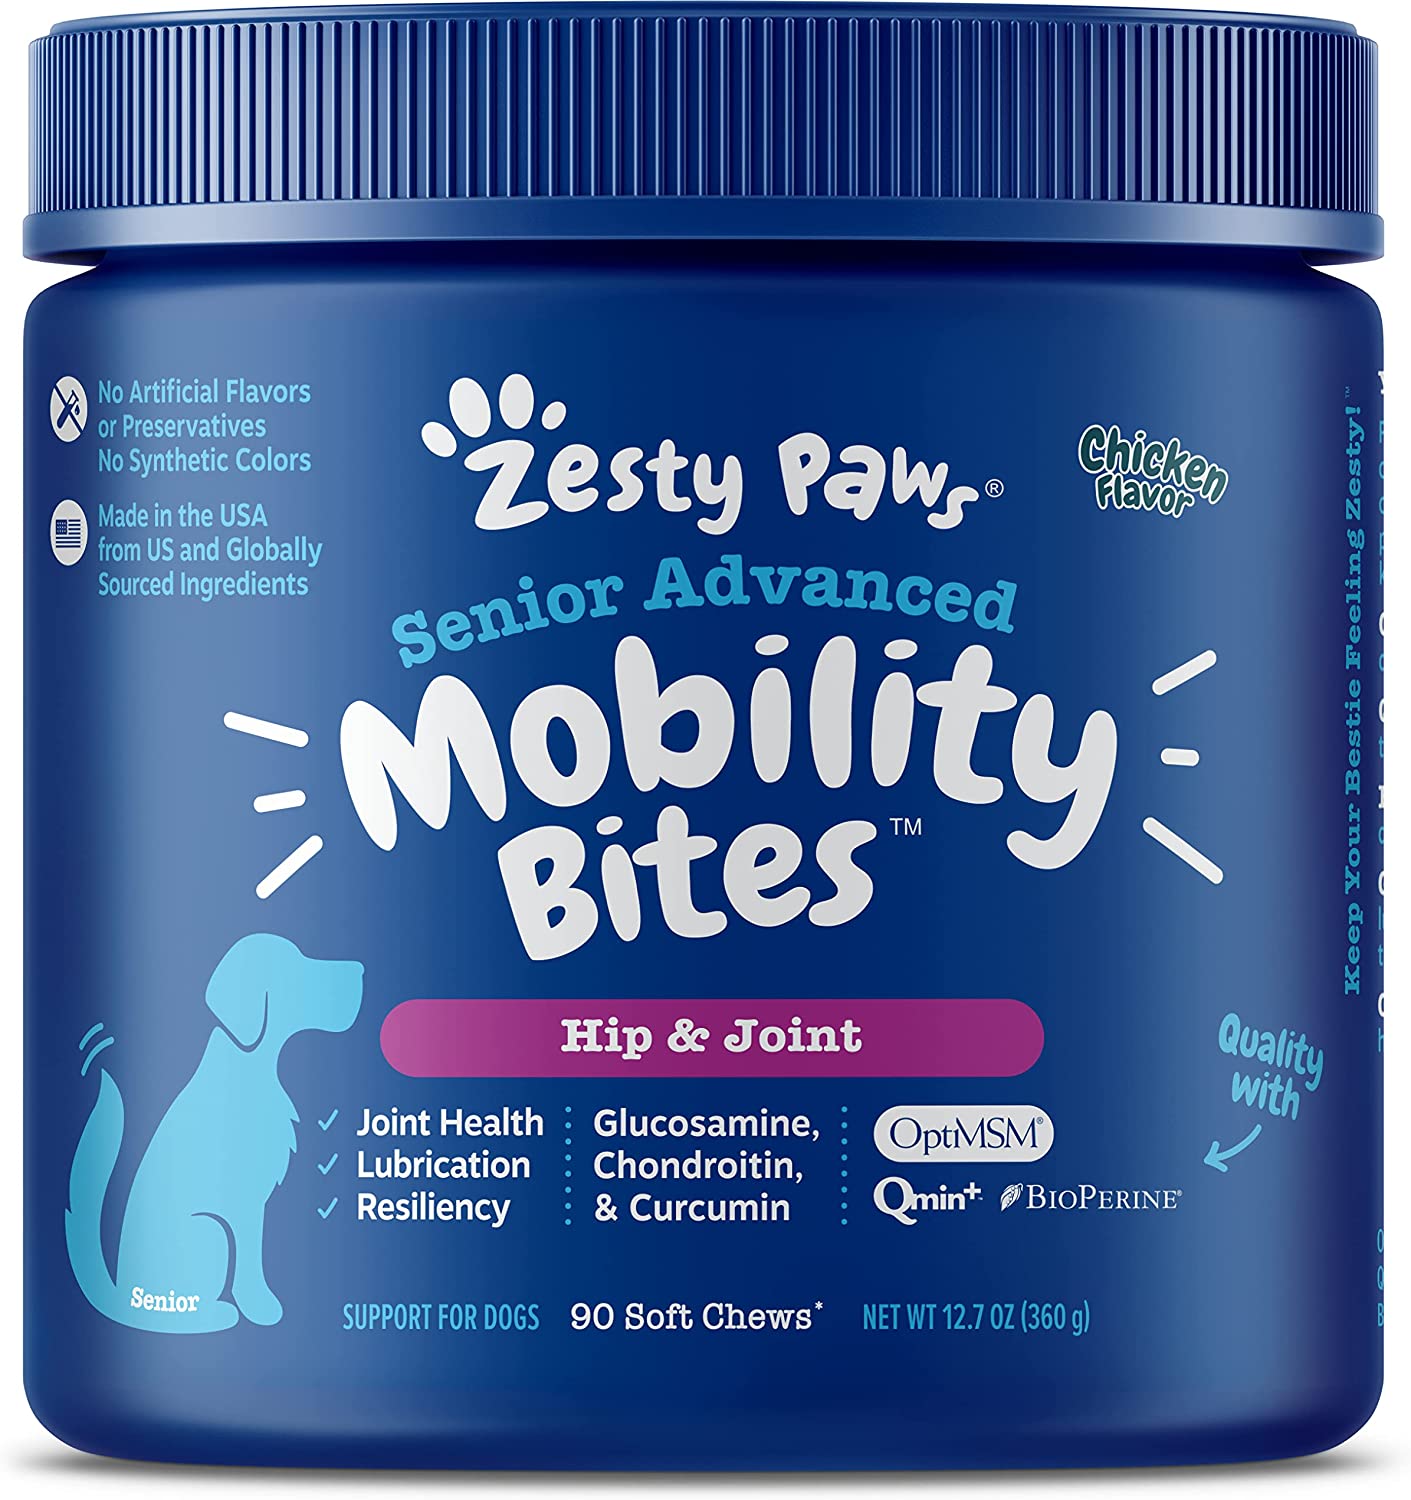 7. Zesty Paws Senior Advanced Mobility Bites